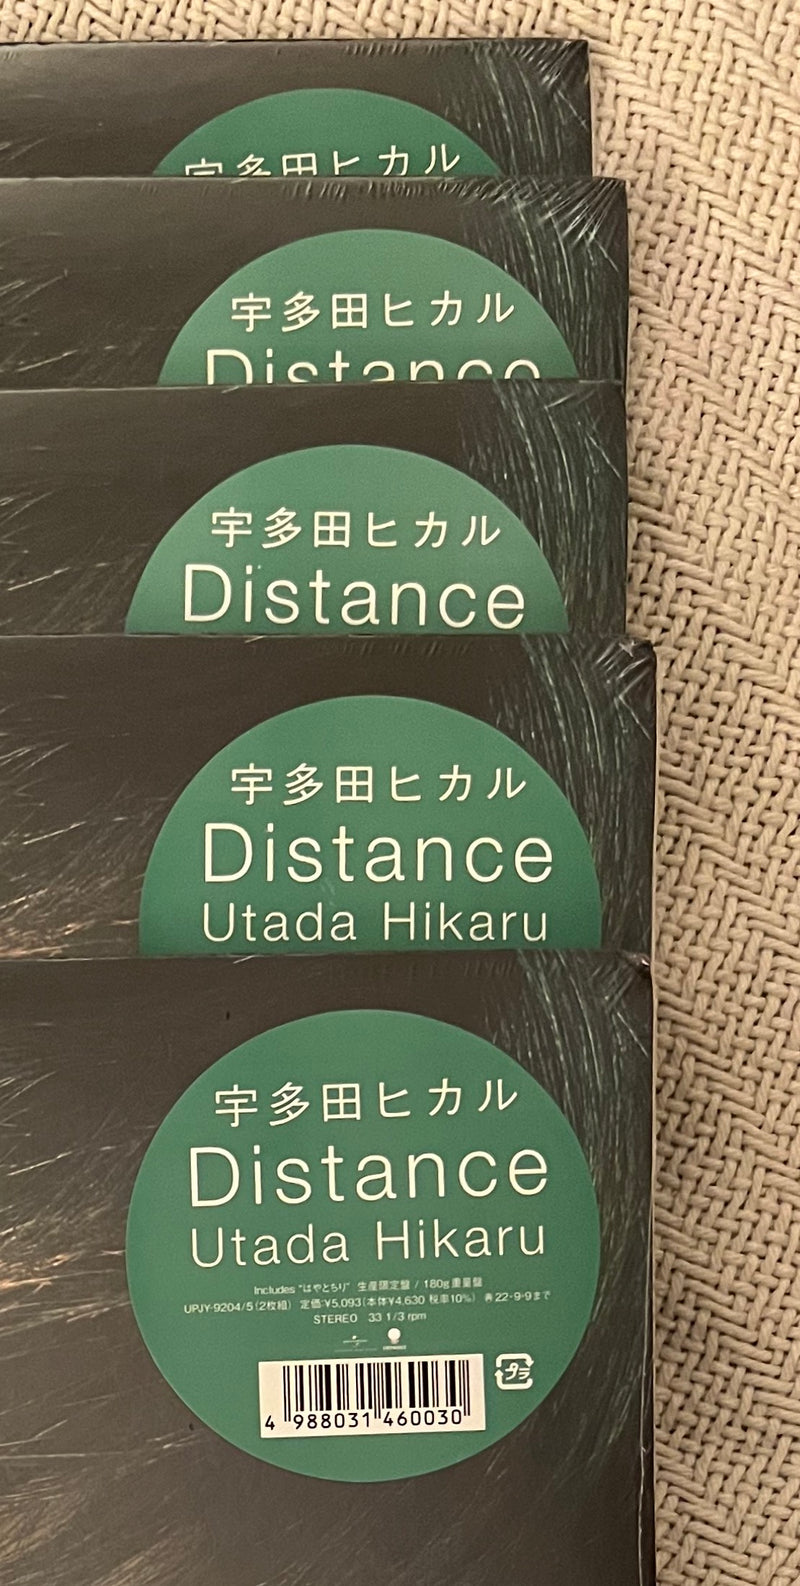 Load image into Gallery viewer, Hikaru Utada - Distance 2LP (Damaged)
